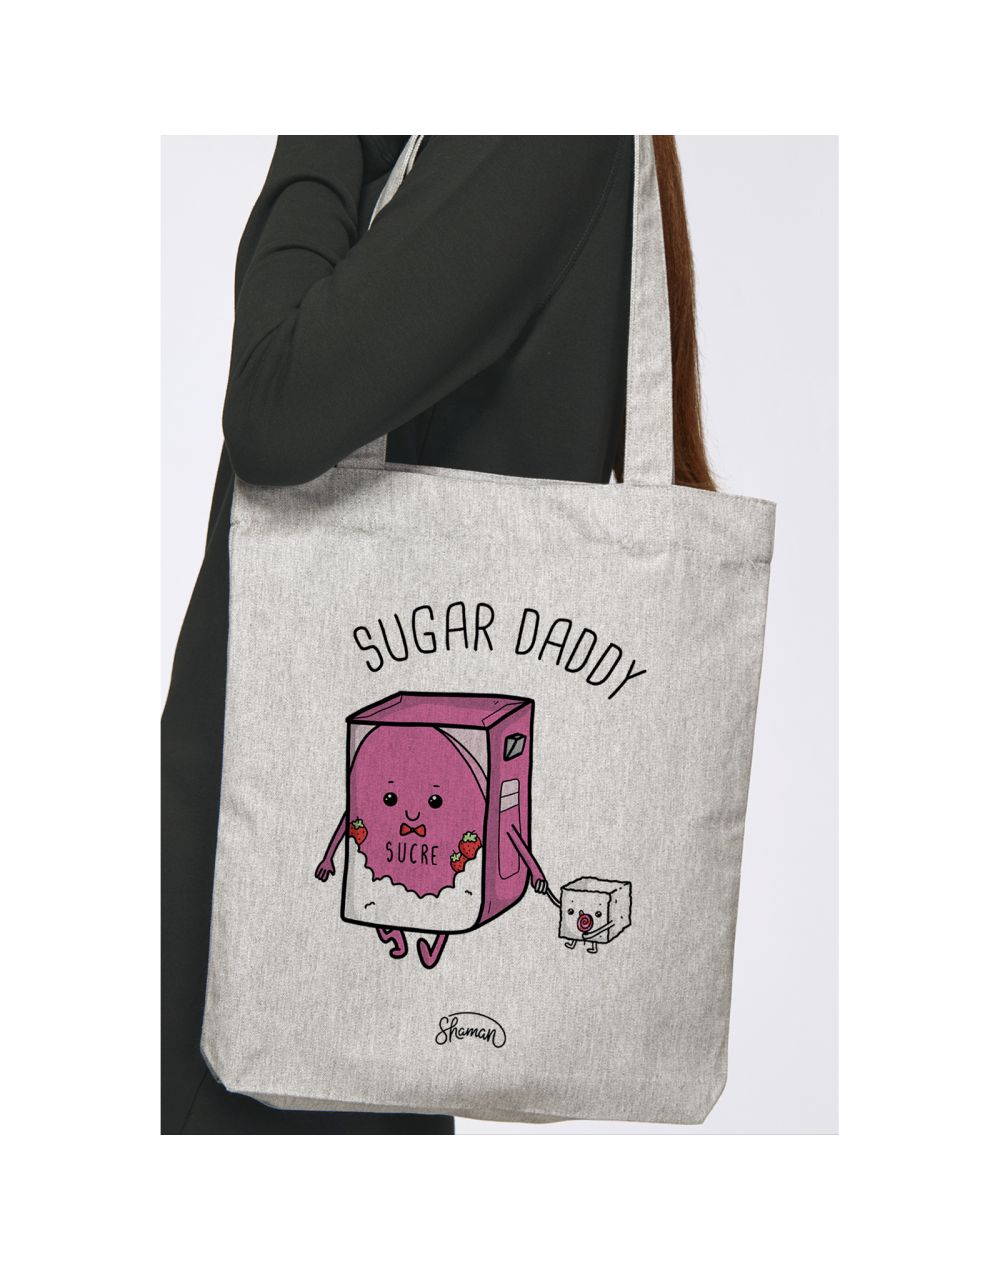 Tote Bag "Sugar daddy"